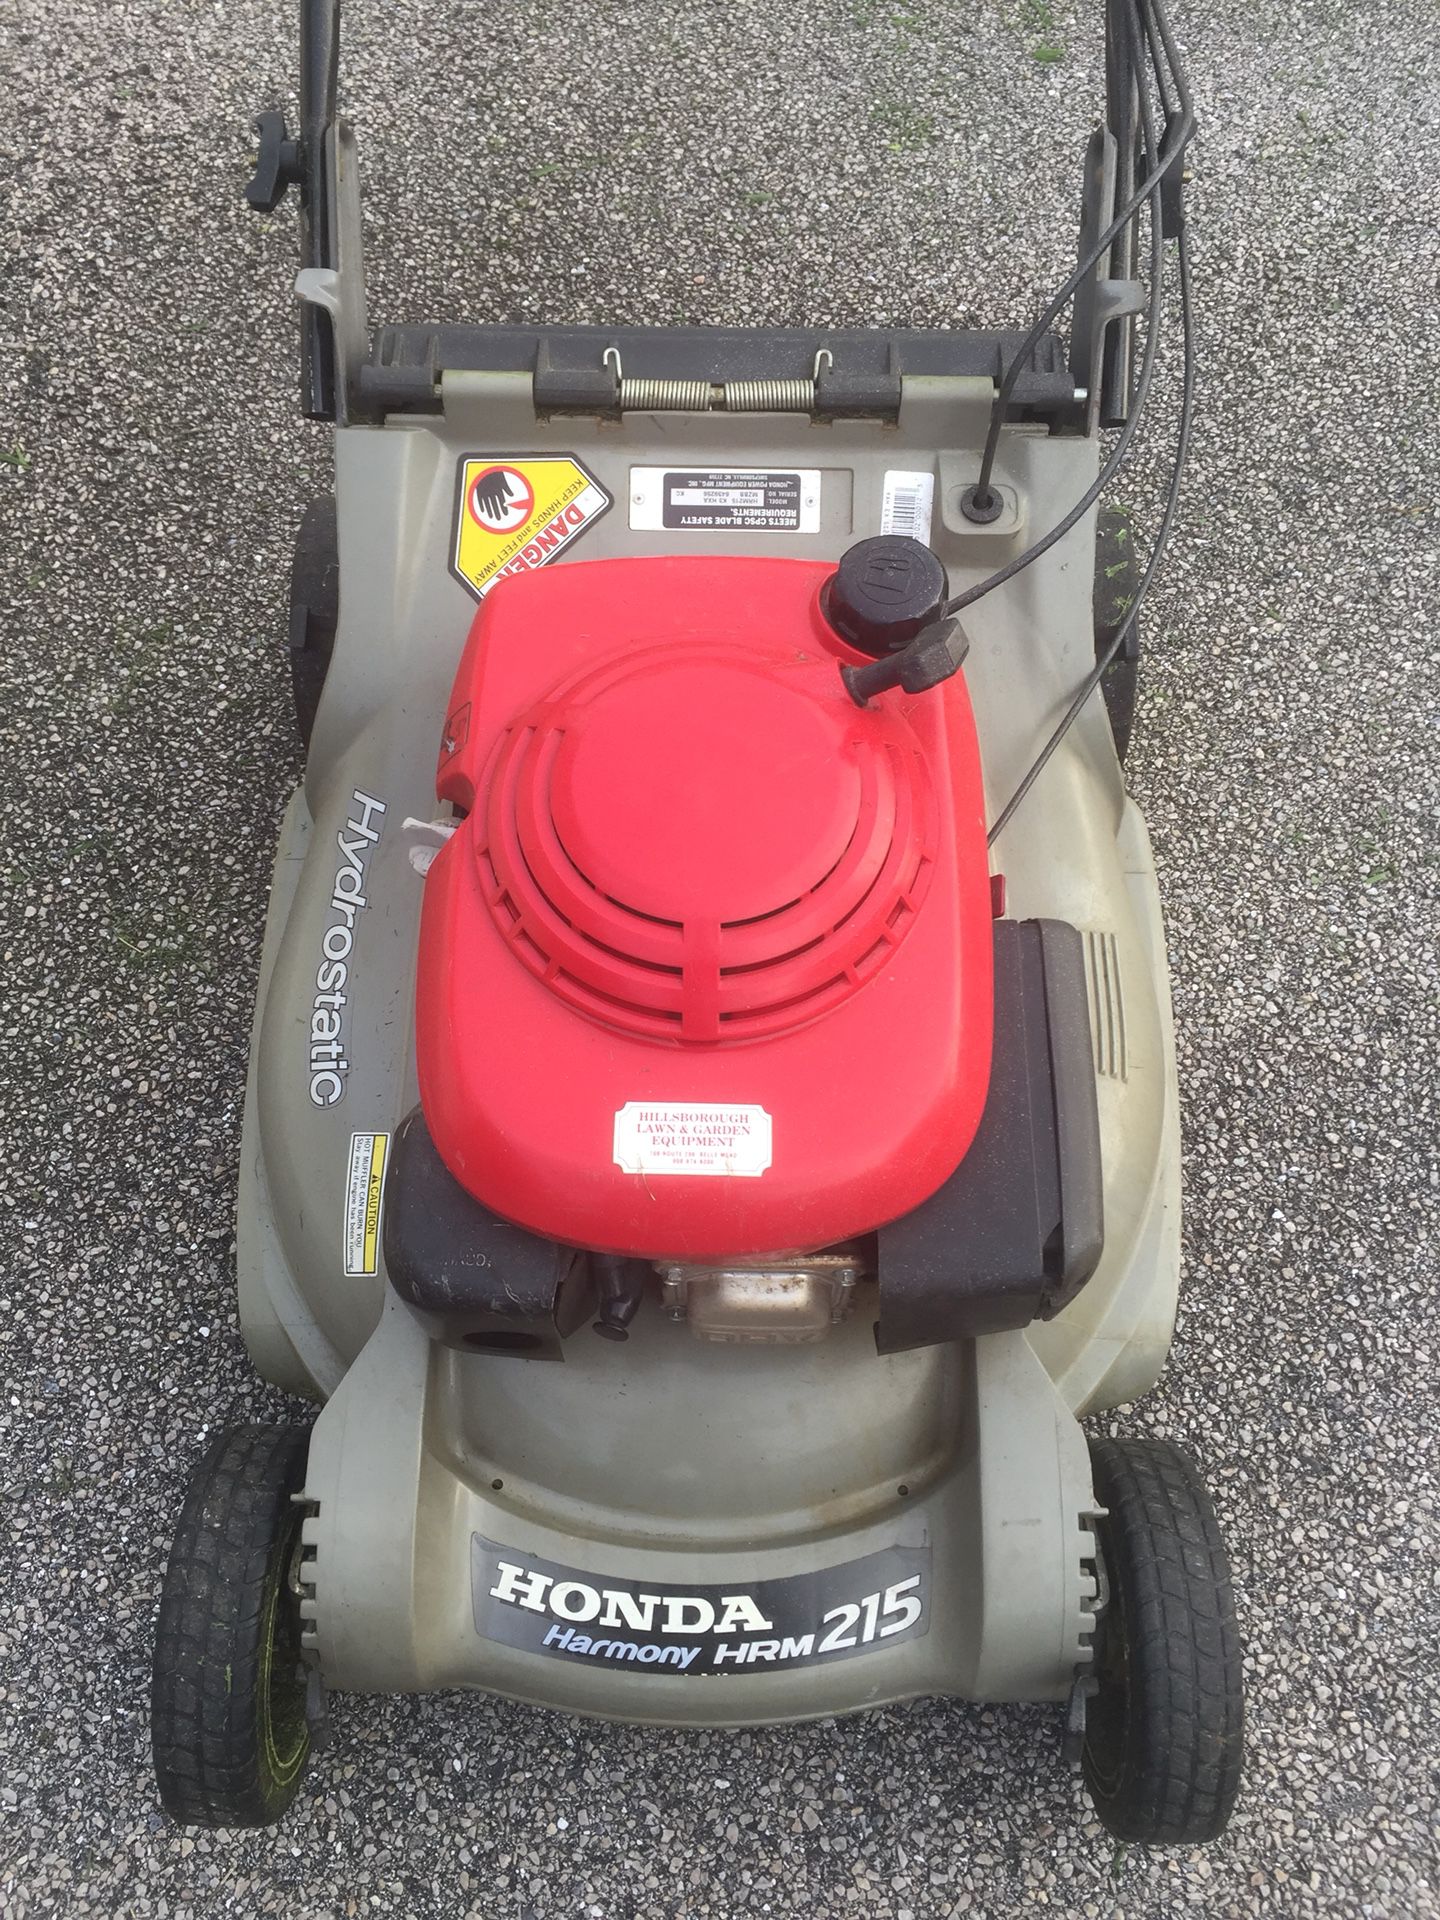 Honda Harmony HRM 215 Self-Propelled Lawn Mower